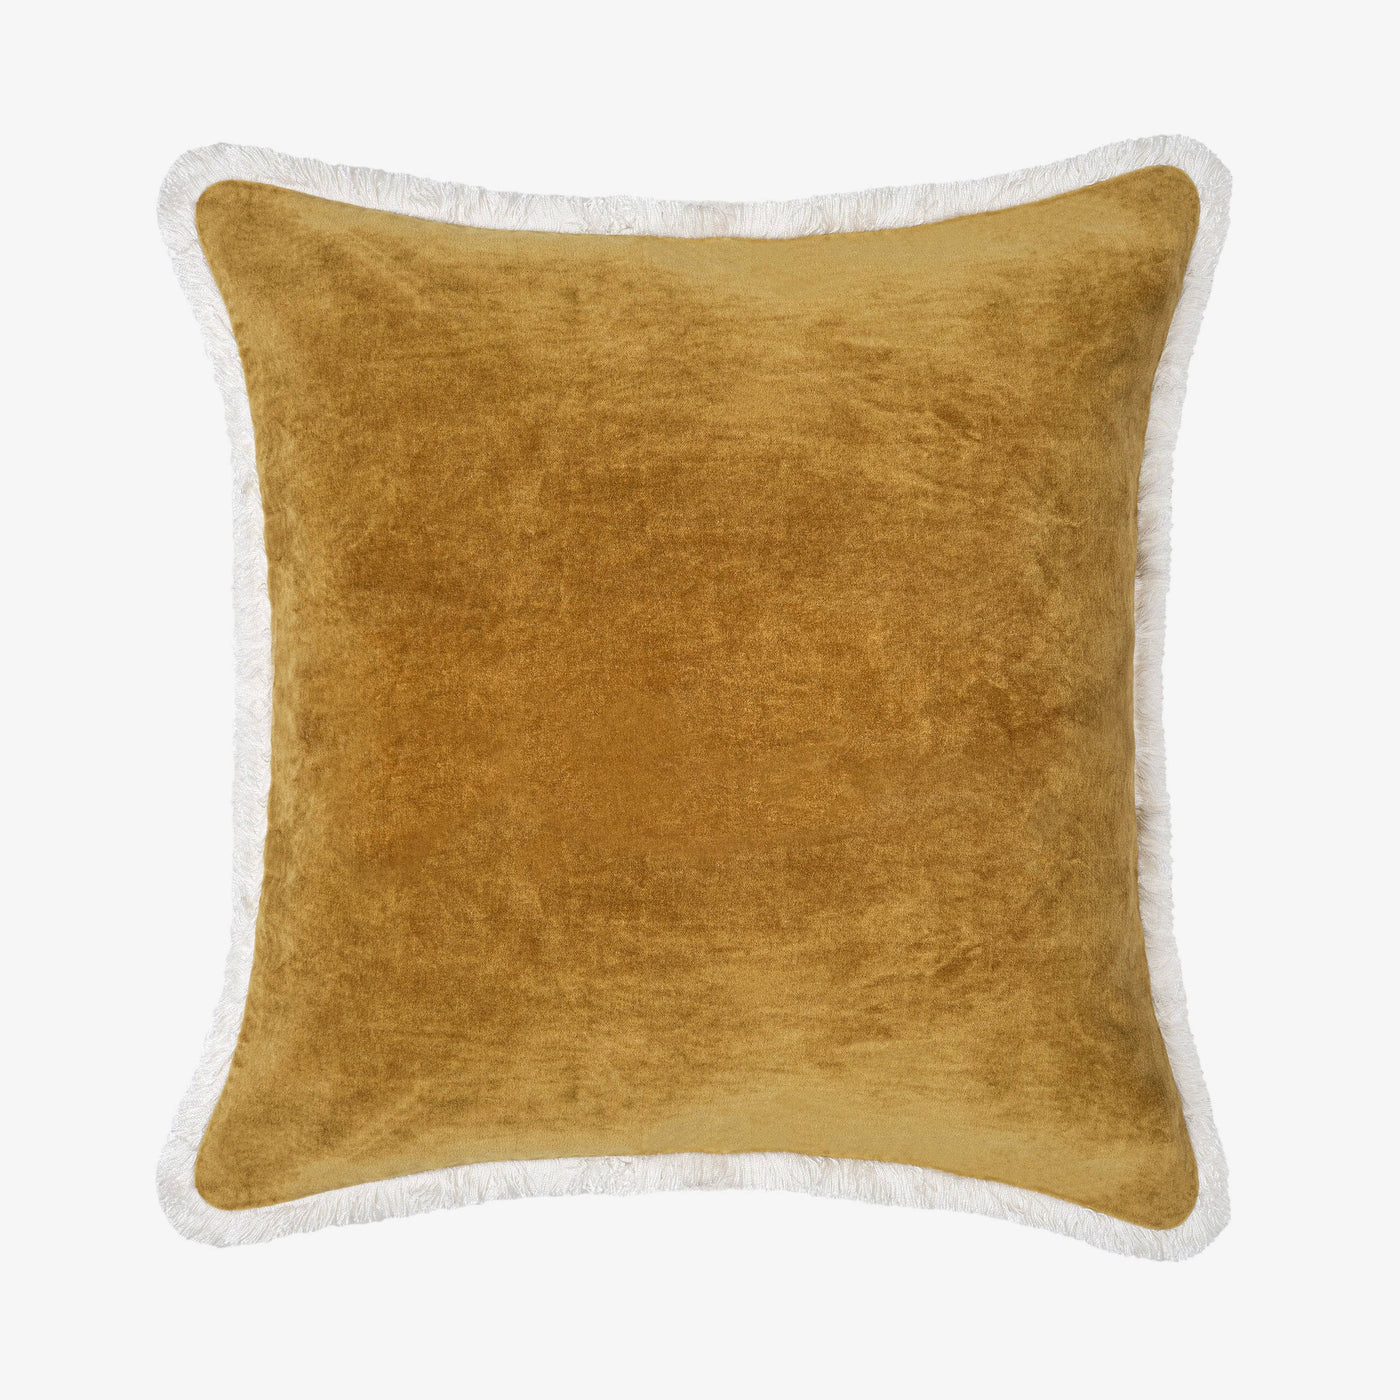 Ariel Cushion Cover, Mustard, 50x50 cm Cushion Covers sazy.com